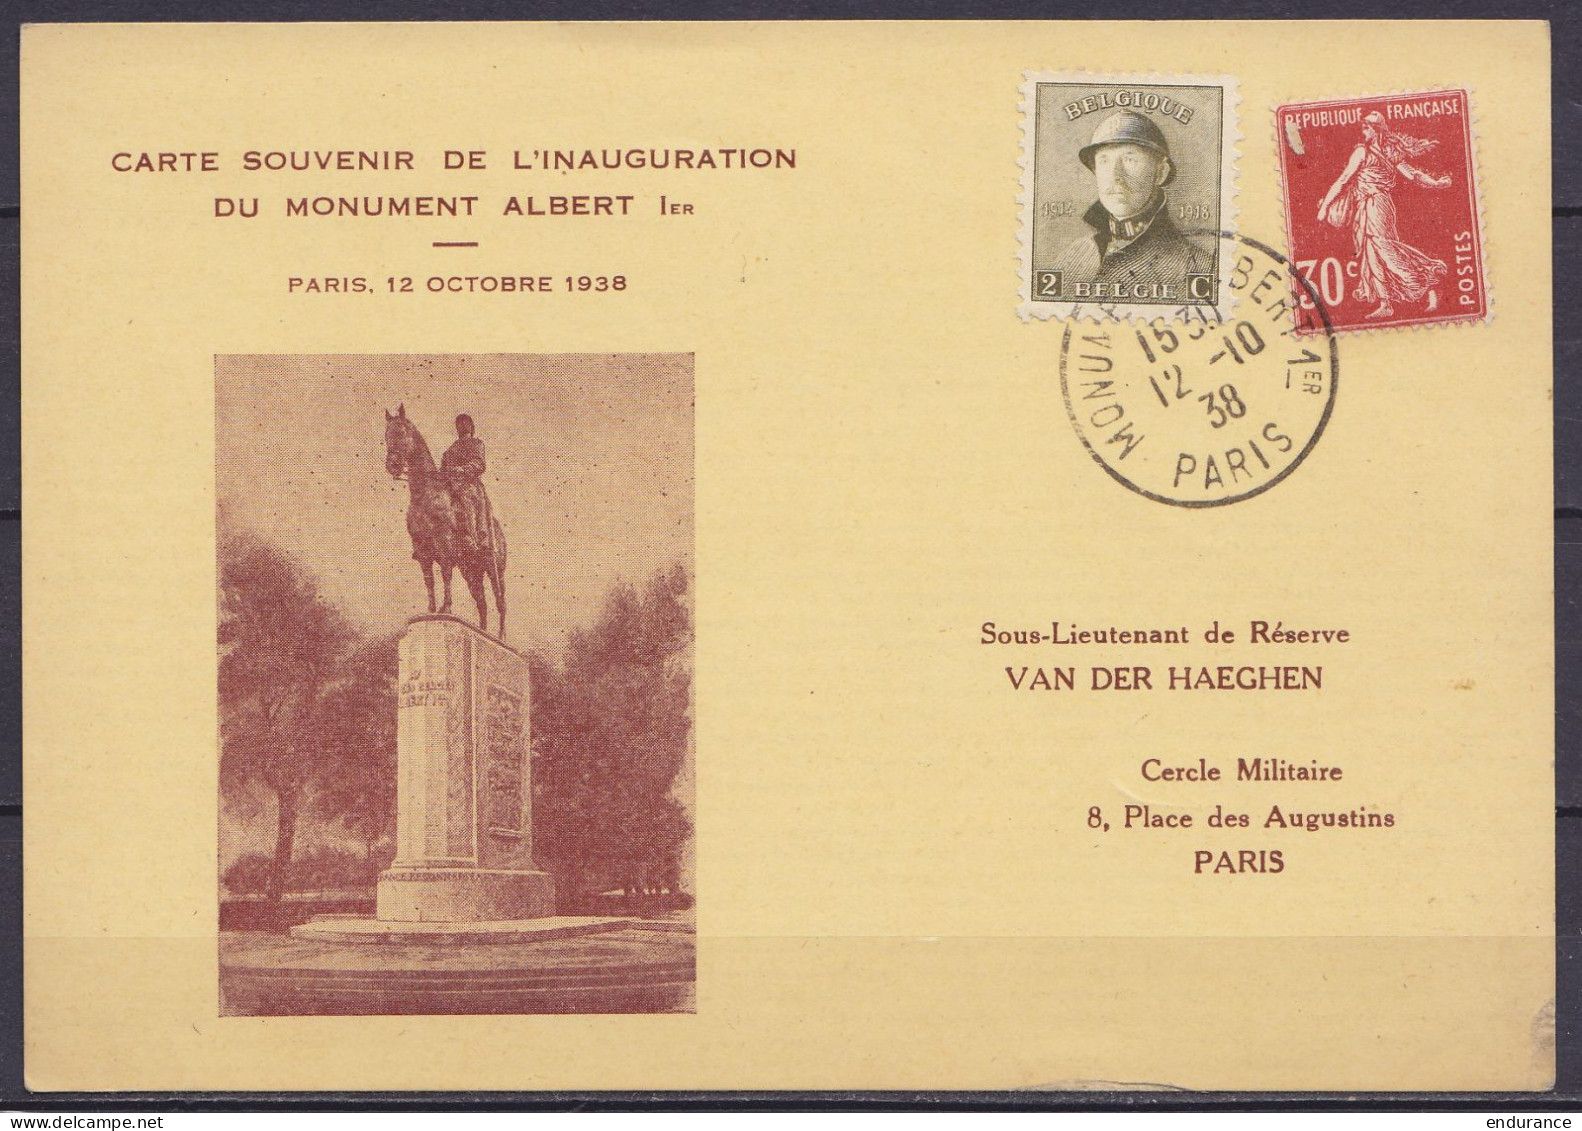 Carte Souvenir De L'inauguration Du Monument Albert 1e Affr. N°166 + Semeuse 30c Càd "MONUMENT ALBERT 1e /12-10-1938/ PA - 1919-1920 Trench Helmet